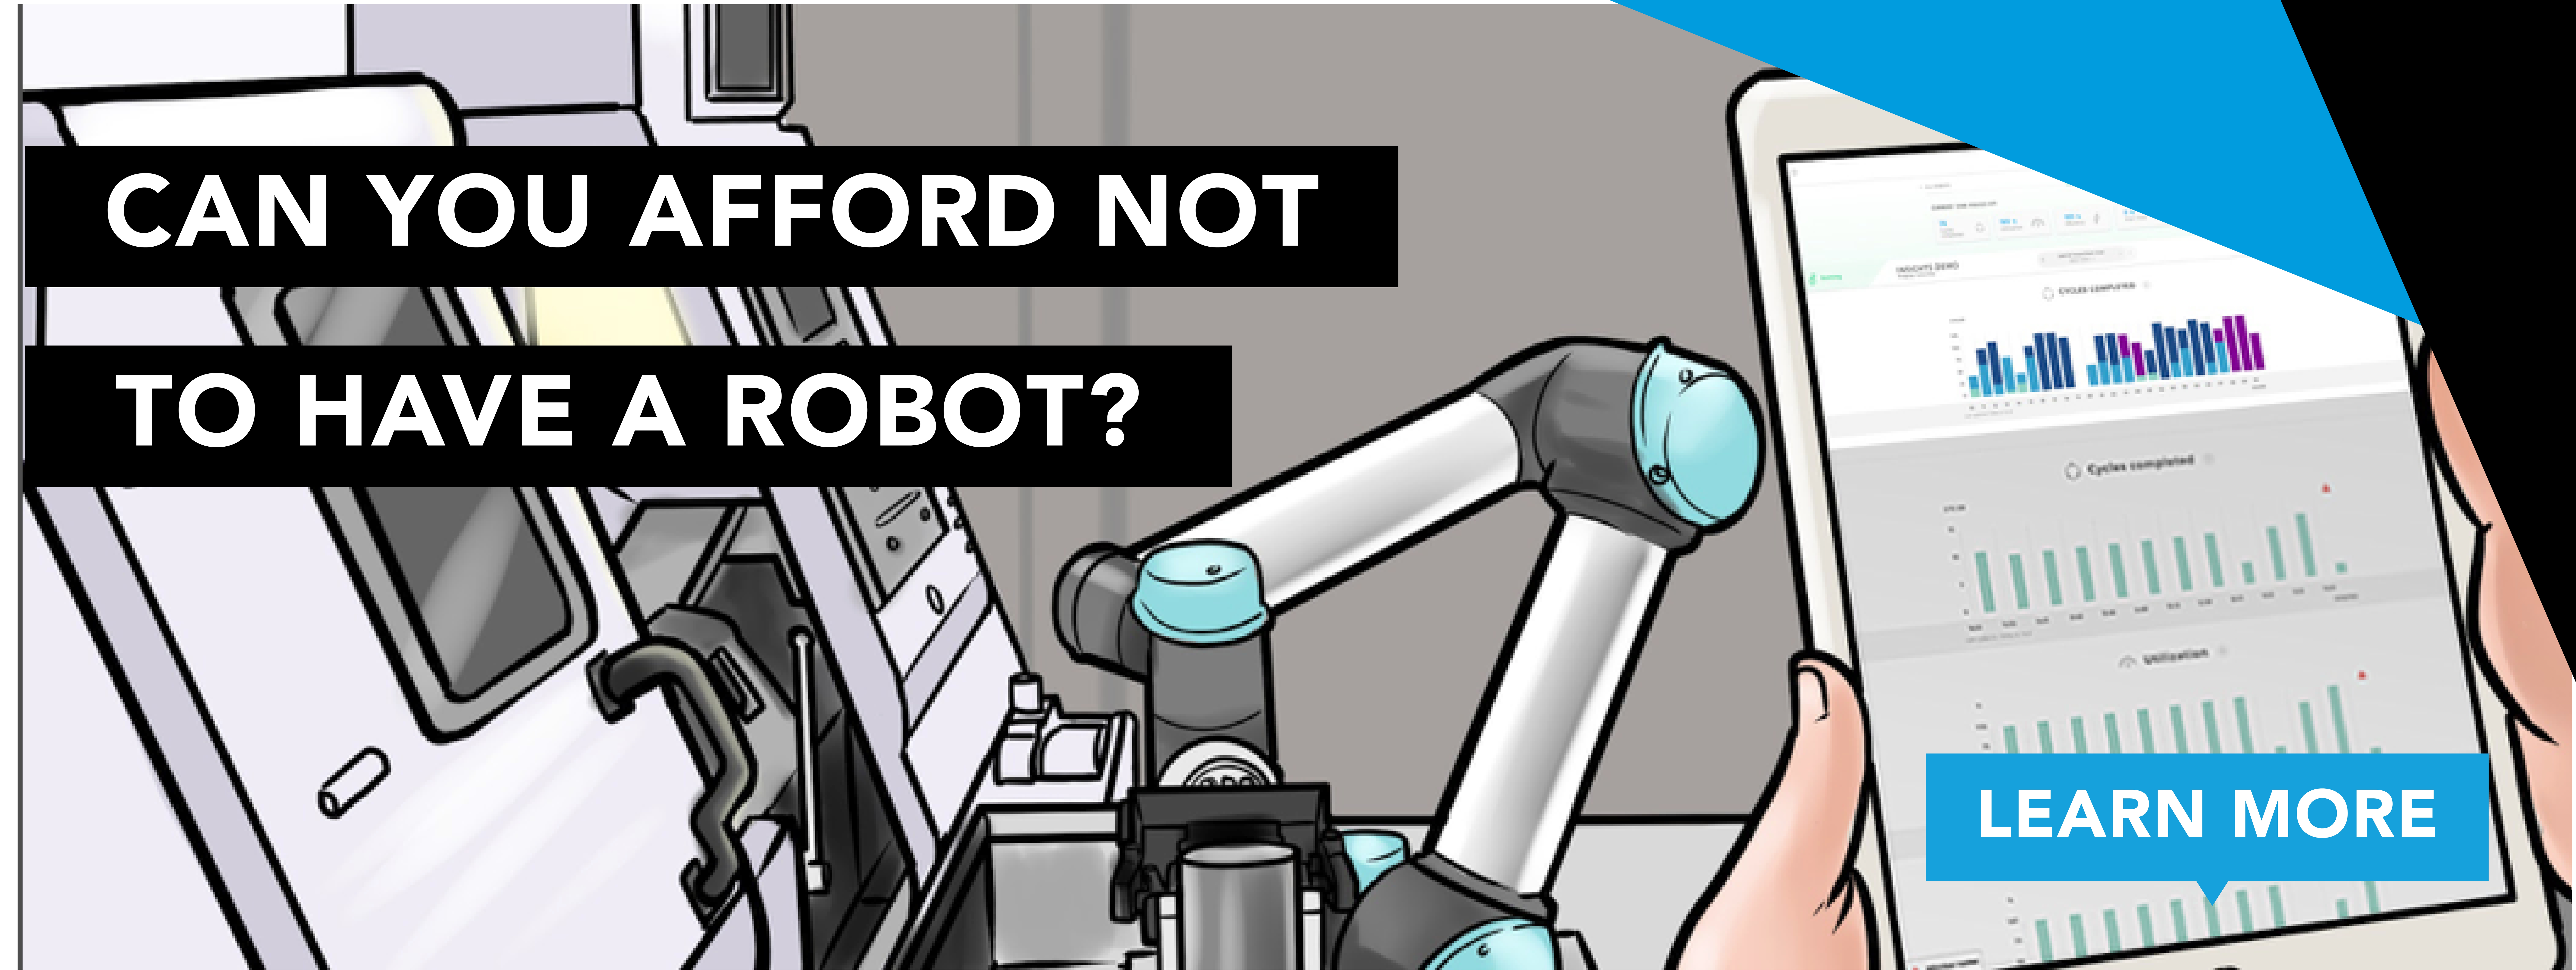 cta-can-you-not-afford-a-robot.jpg